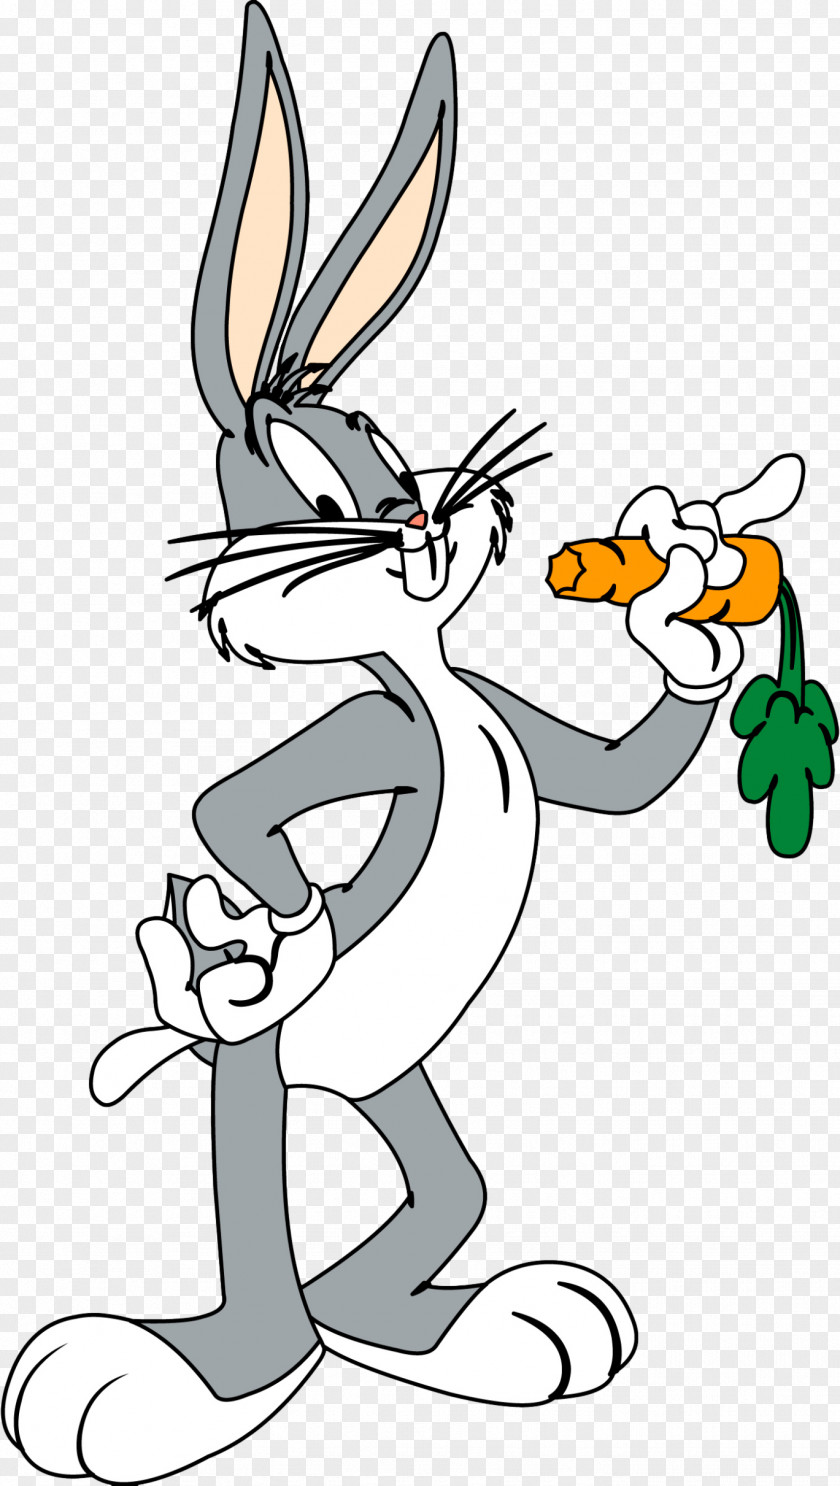 Bugs Bunny Elmer Fudd Daffy Duck Looney Tunes Cartoon PNG